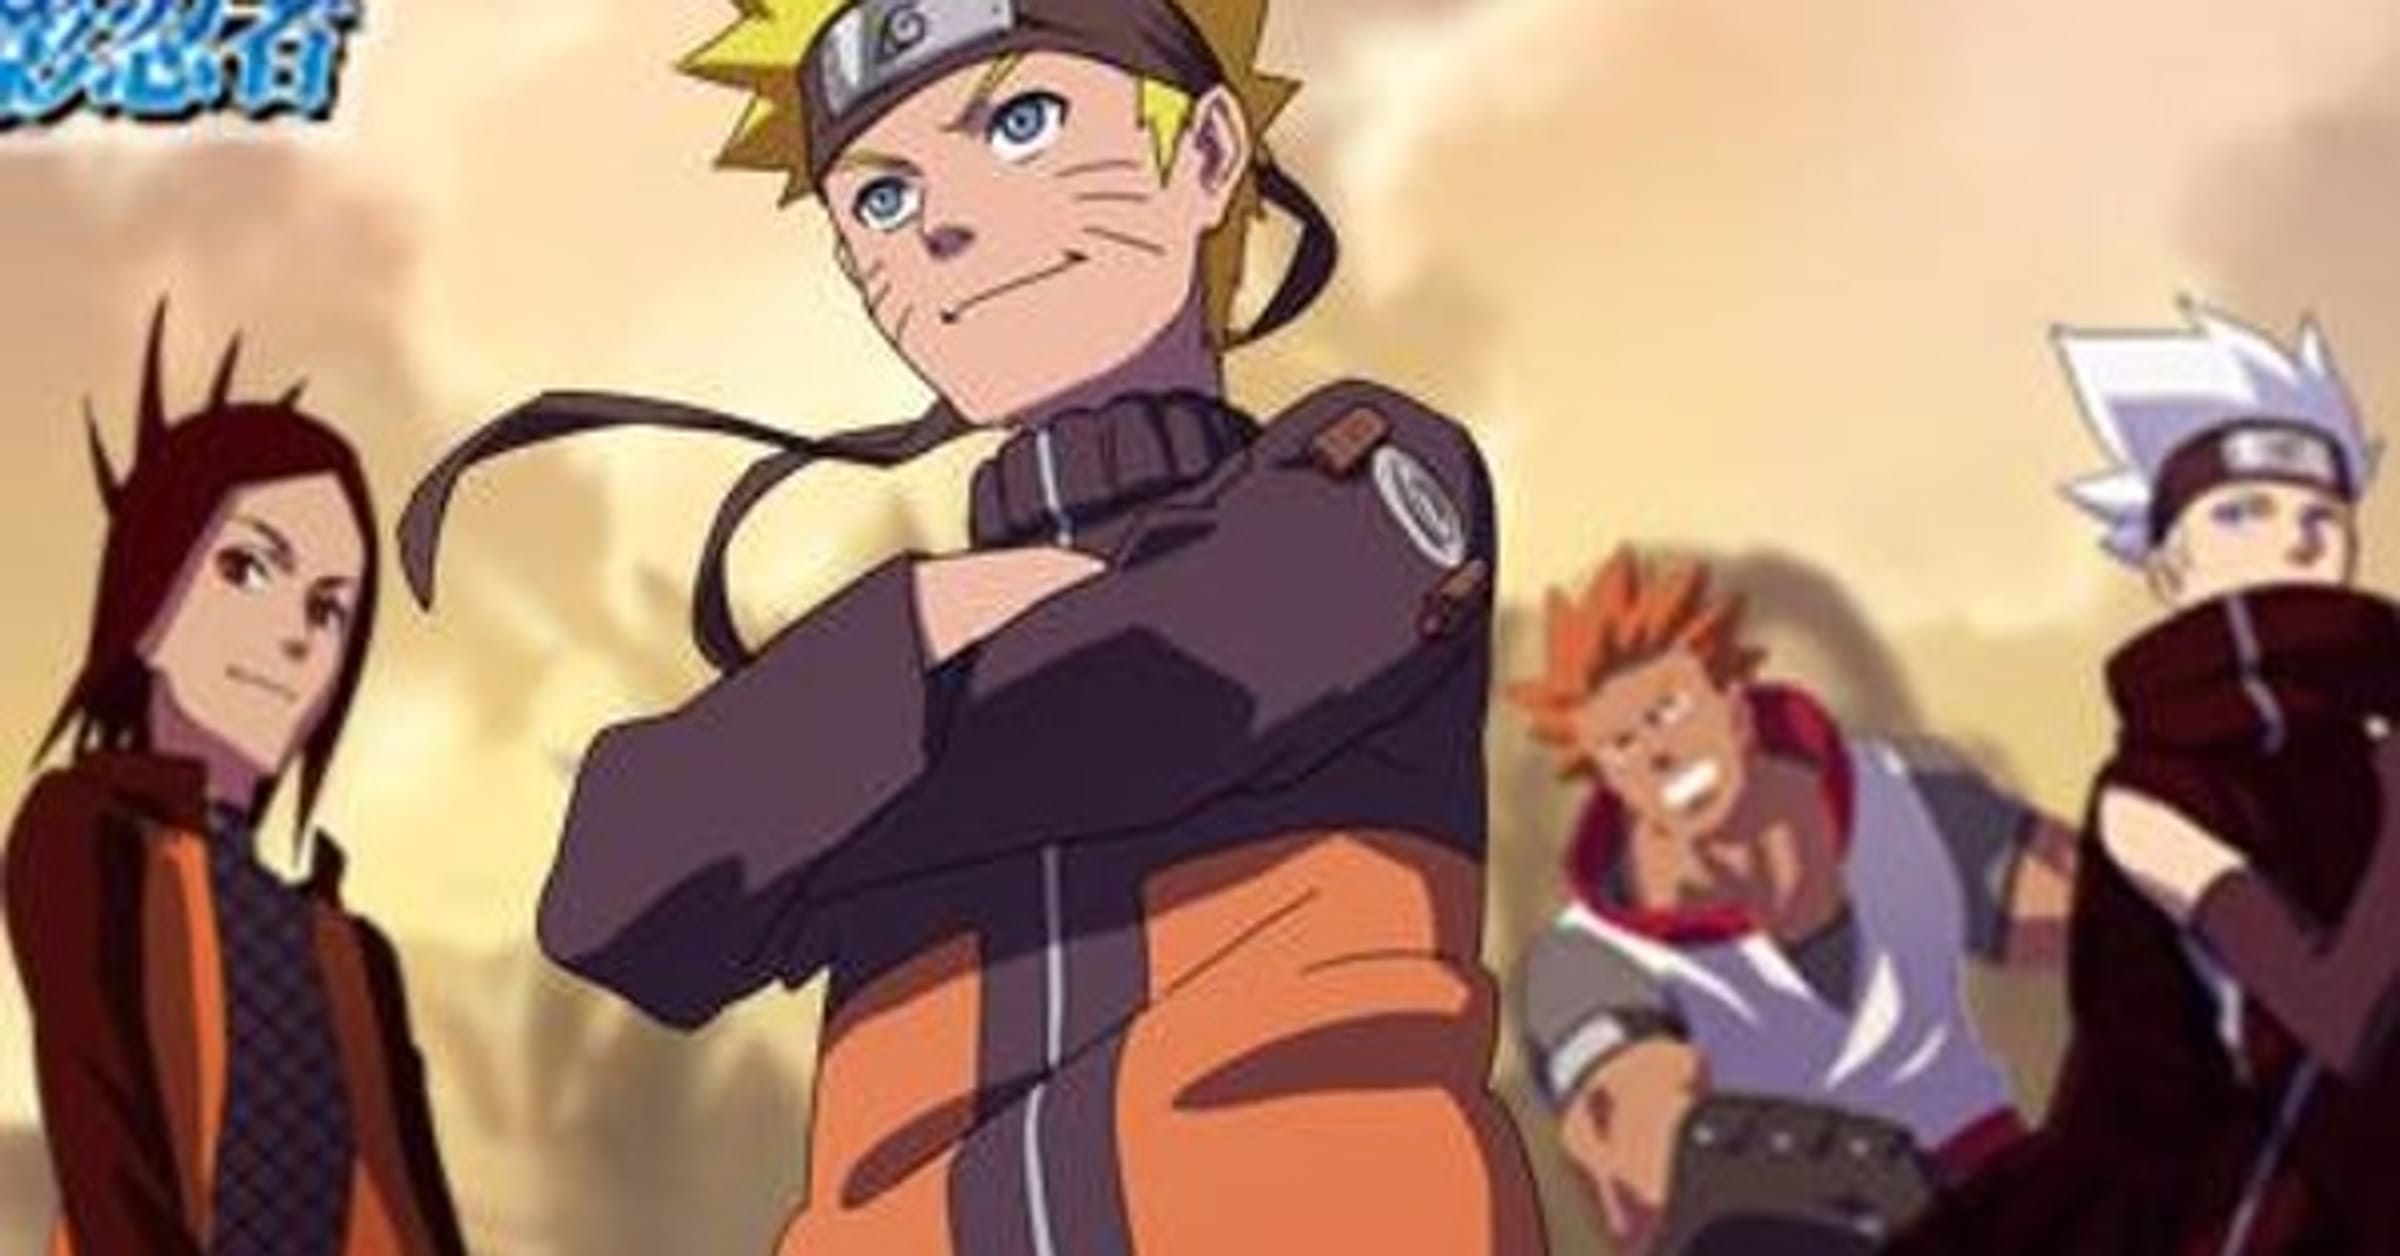 Assistir Naruto: Shippuden Movie 7 - The Last Online em HD